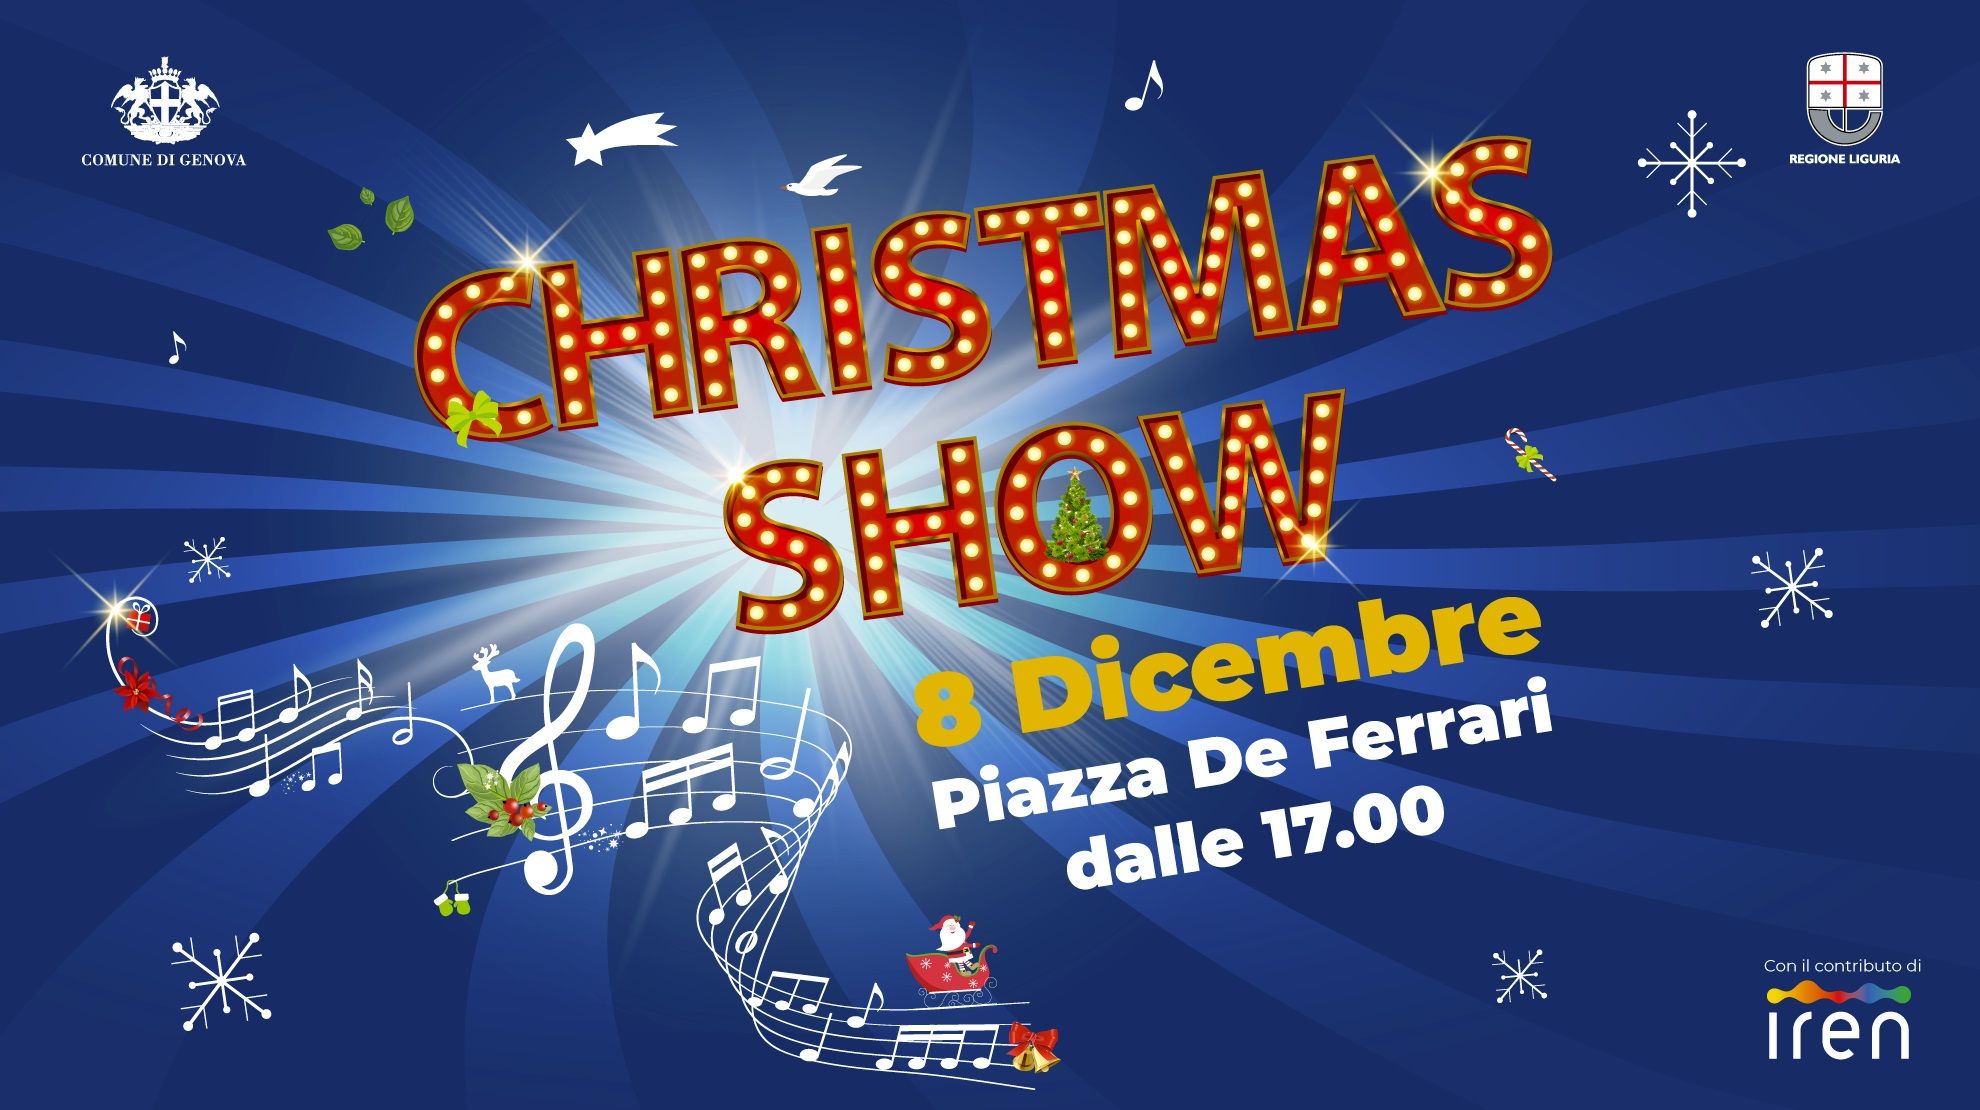 Liguria lights up Christmas with a Grand Show